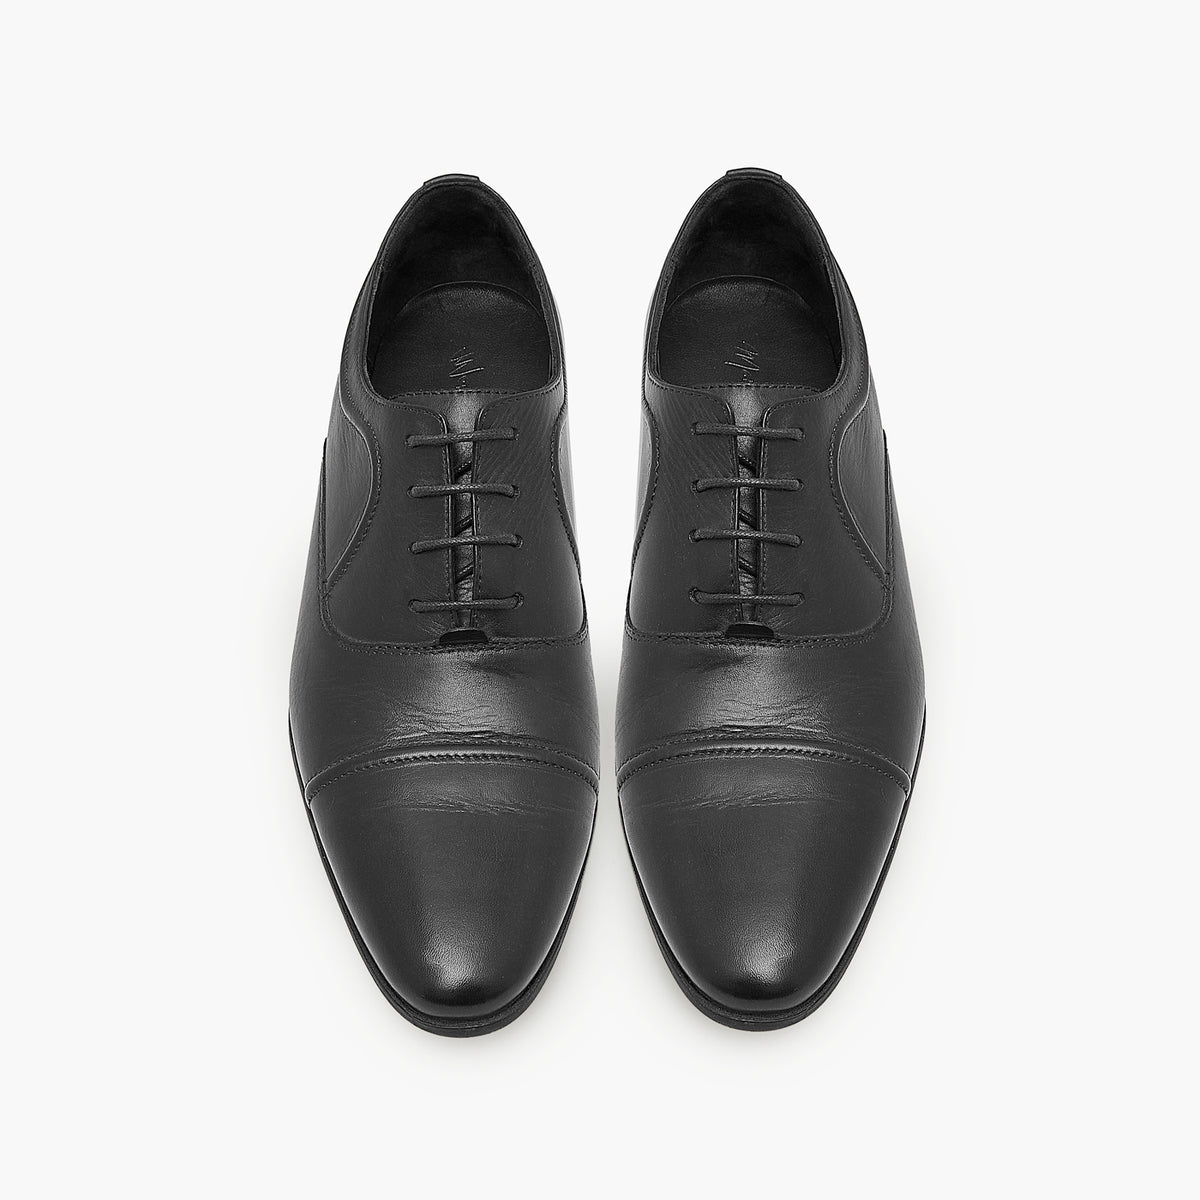 Buy BLACK Men's Stitch Design Formals – ShoePlanet.pk